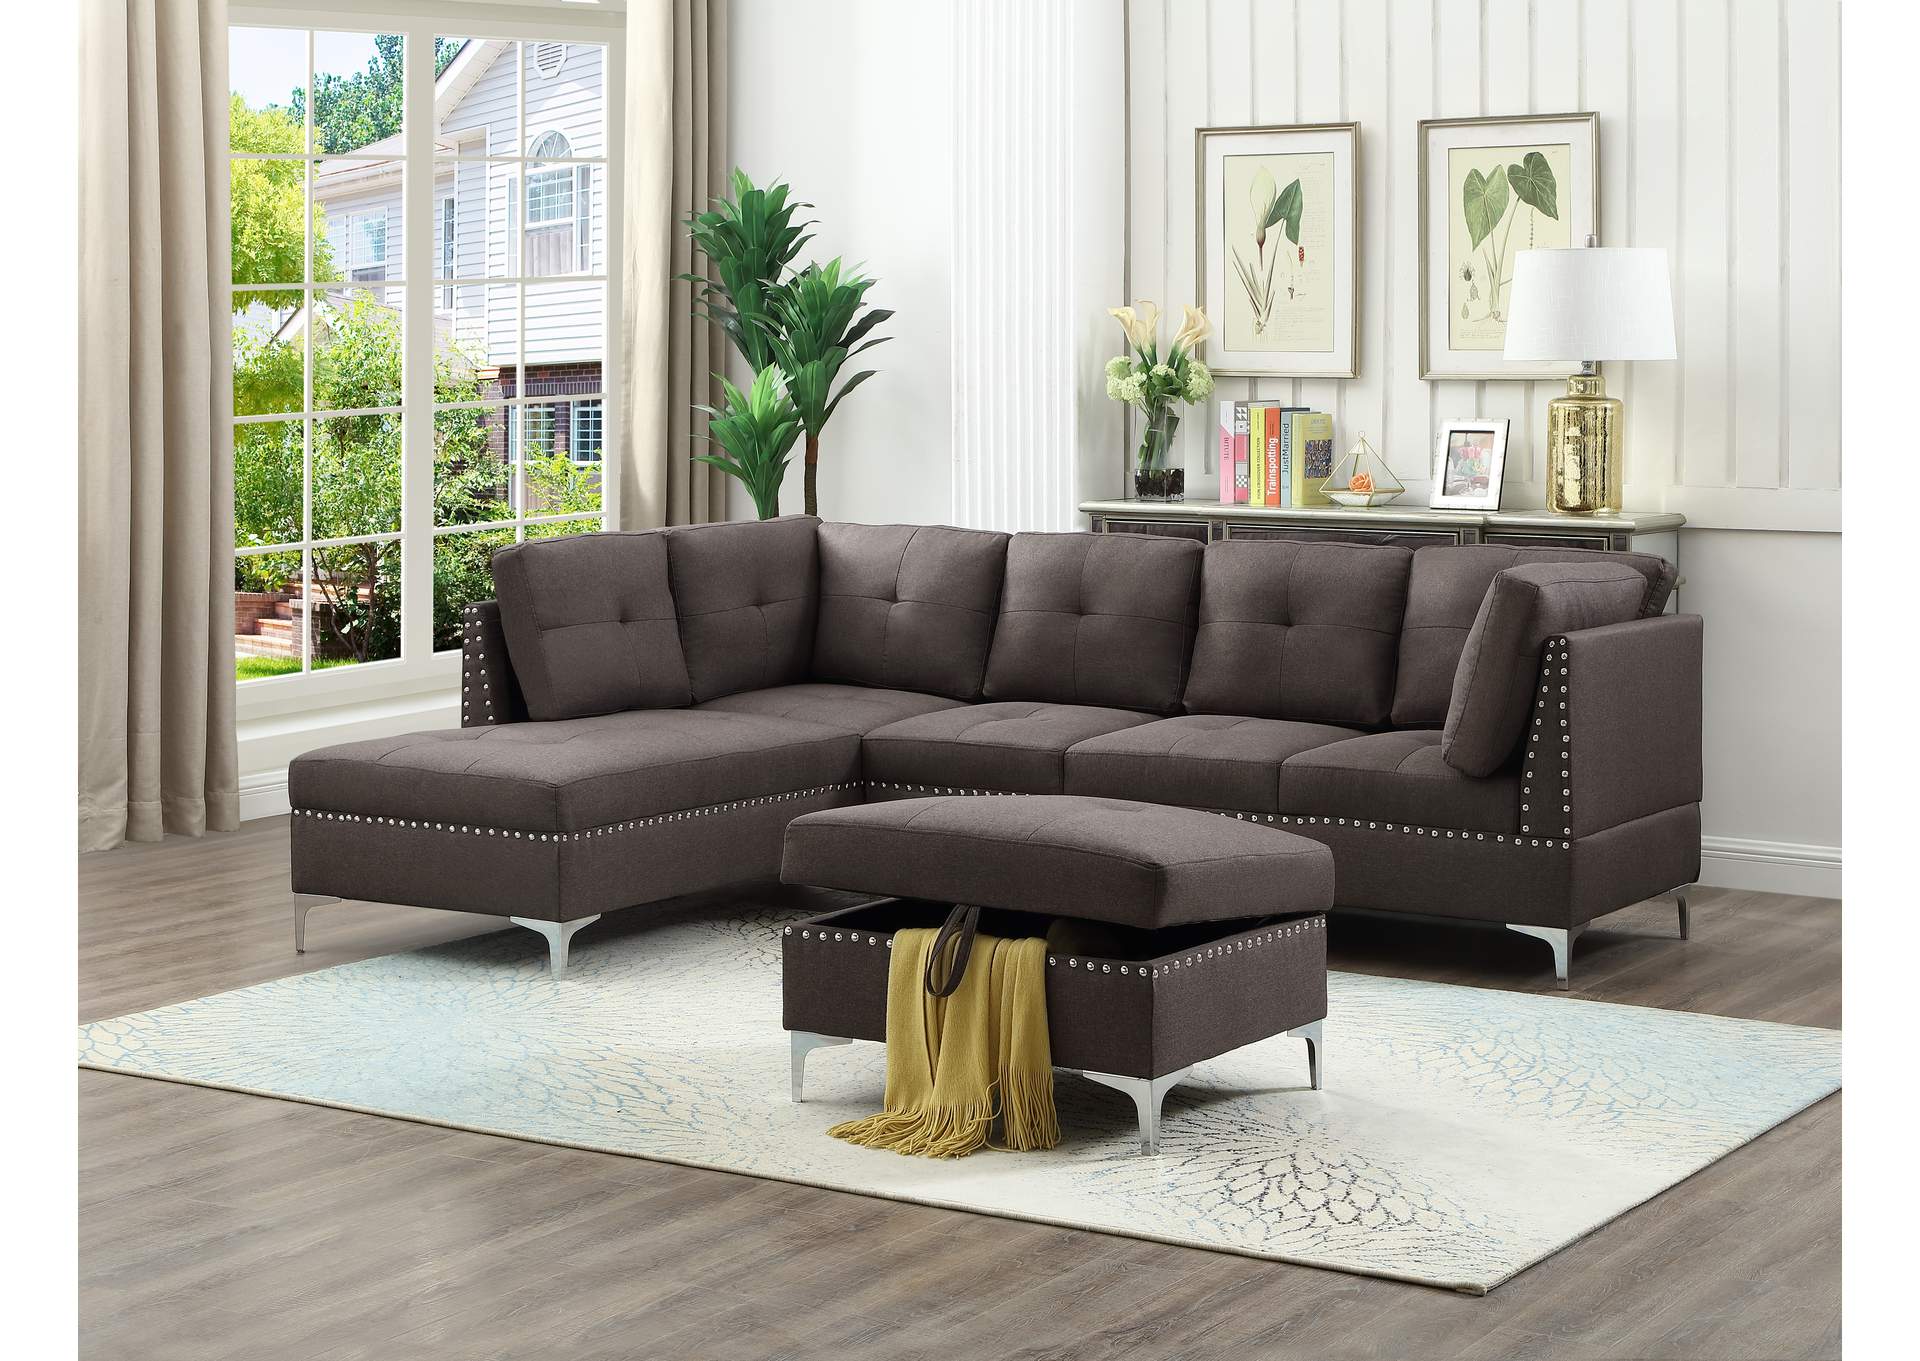 U5033 Brown Sectional Sofa,Global Trading